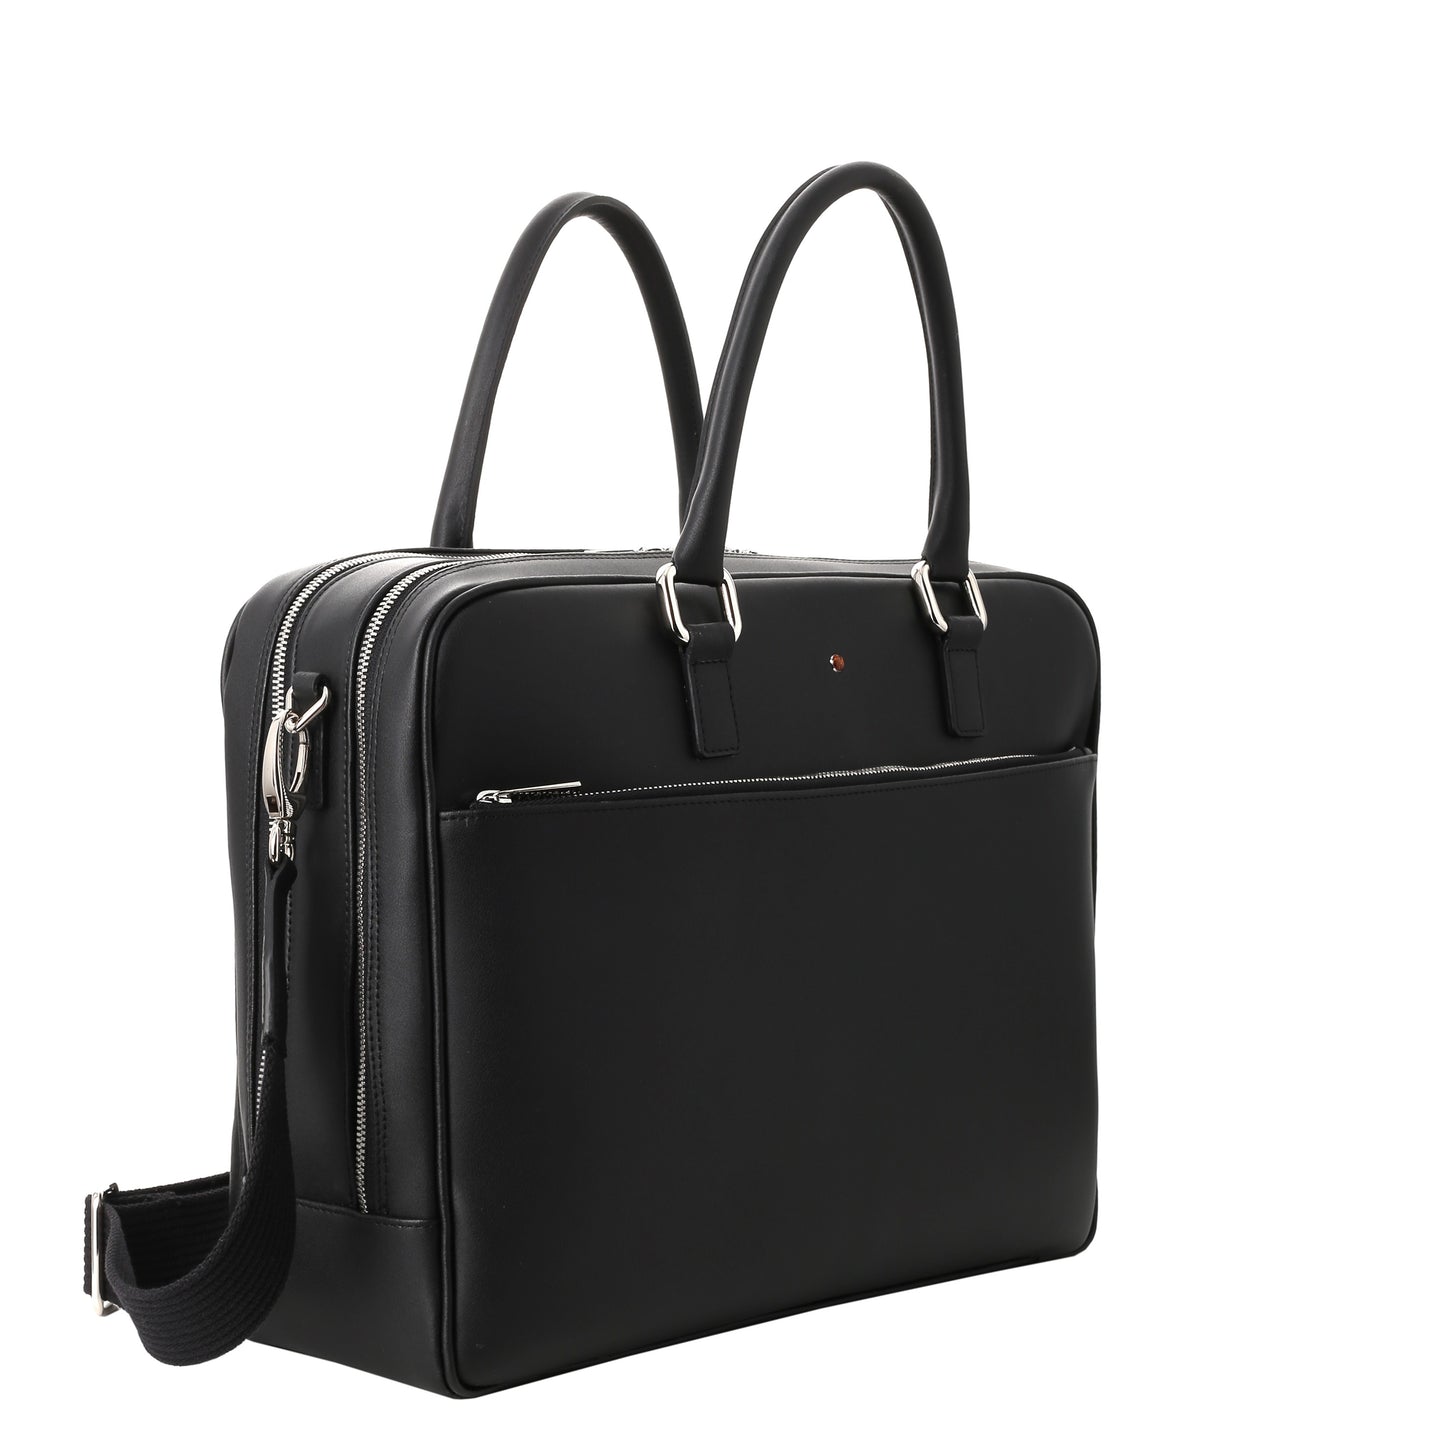 NAPA BLACK leather laptop bag